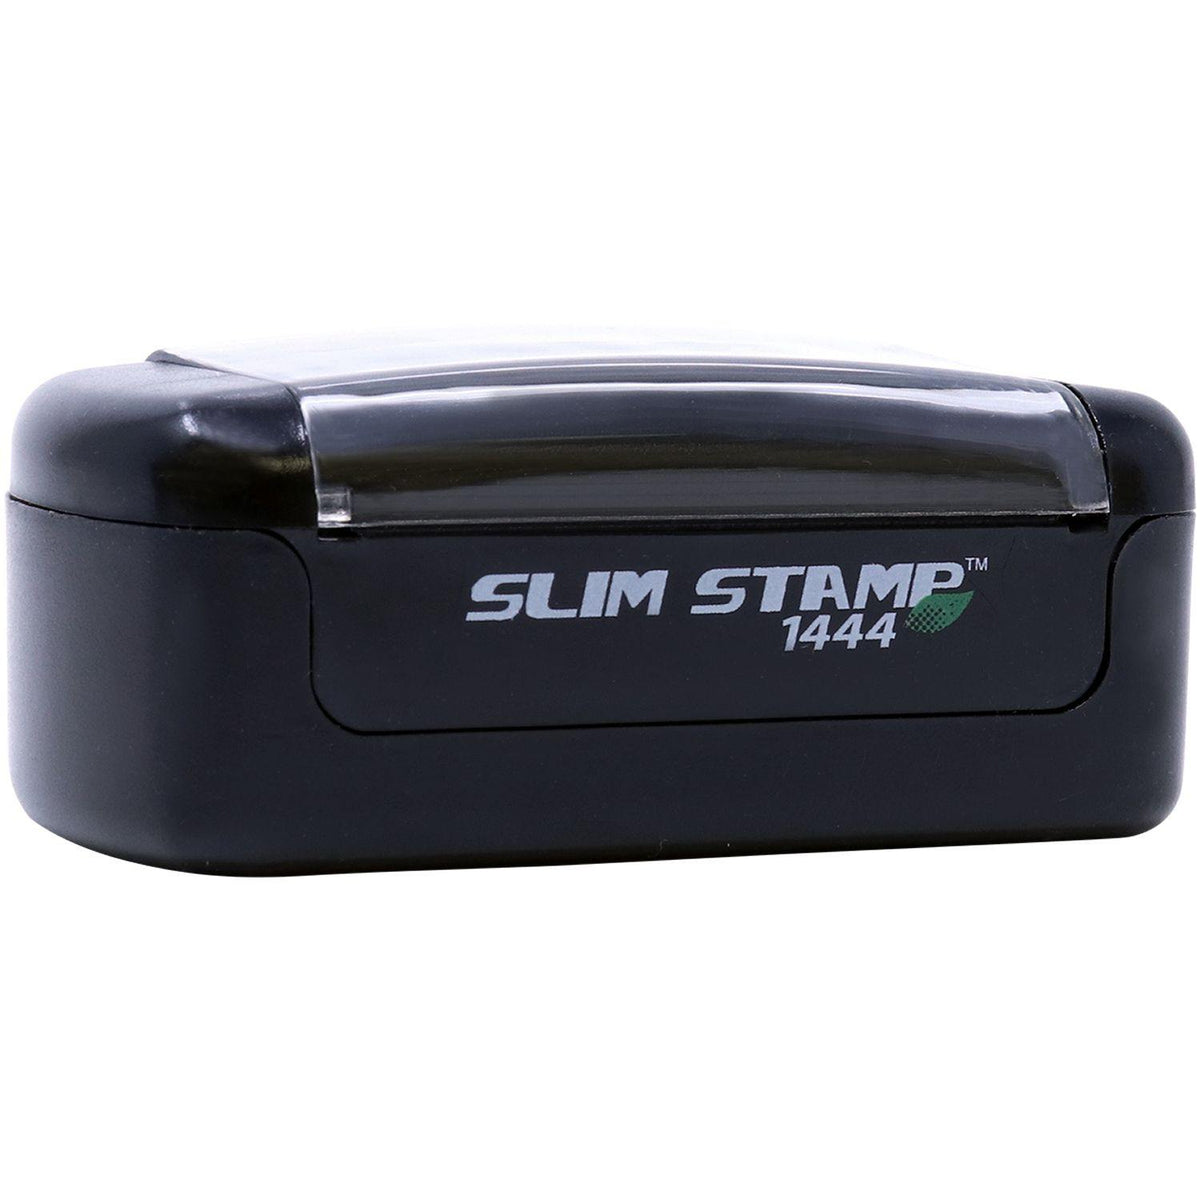 Alt View of Slim Pre-Inked Despachado Stamp Front View